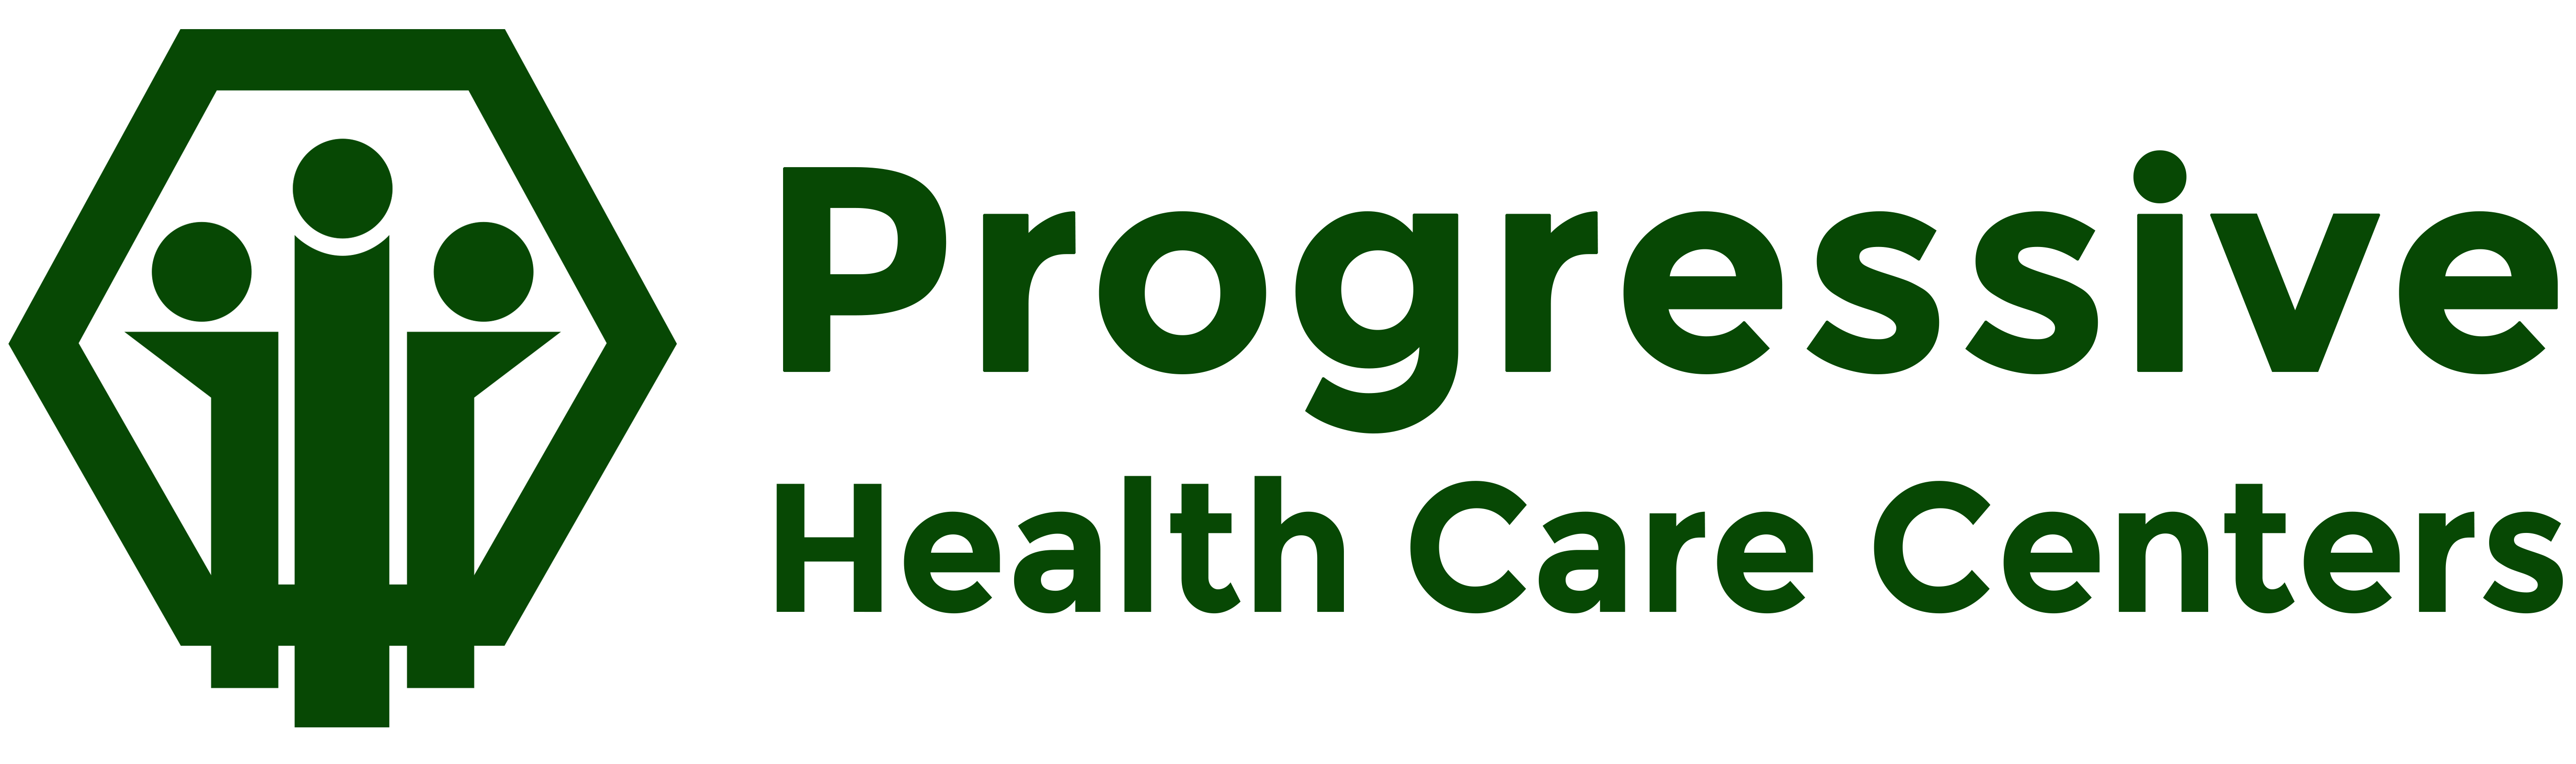 Seniorcarecenters Logo - Senior Care Services - Progressive Care Centers